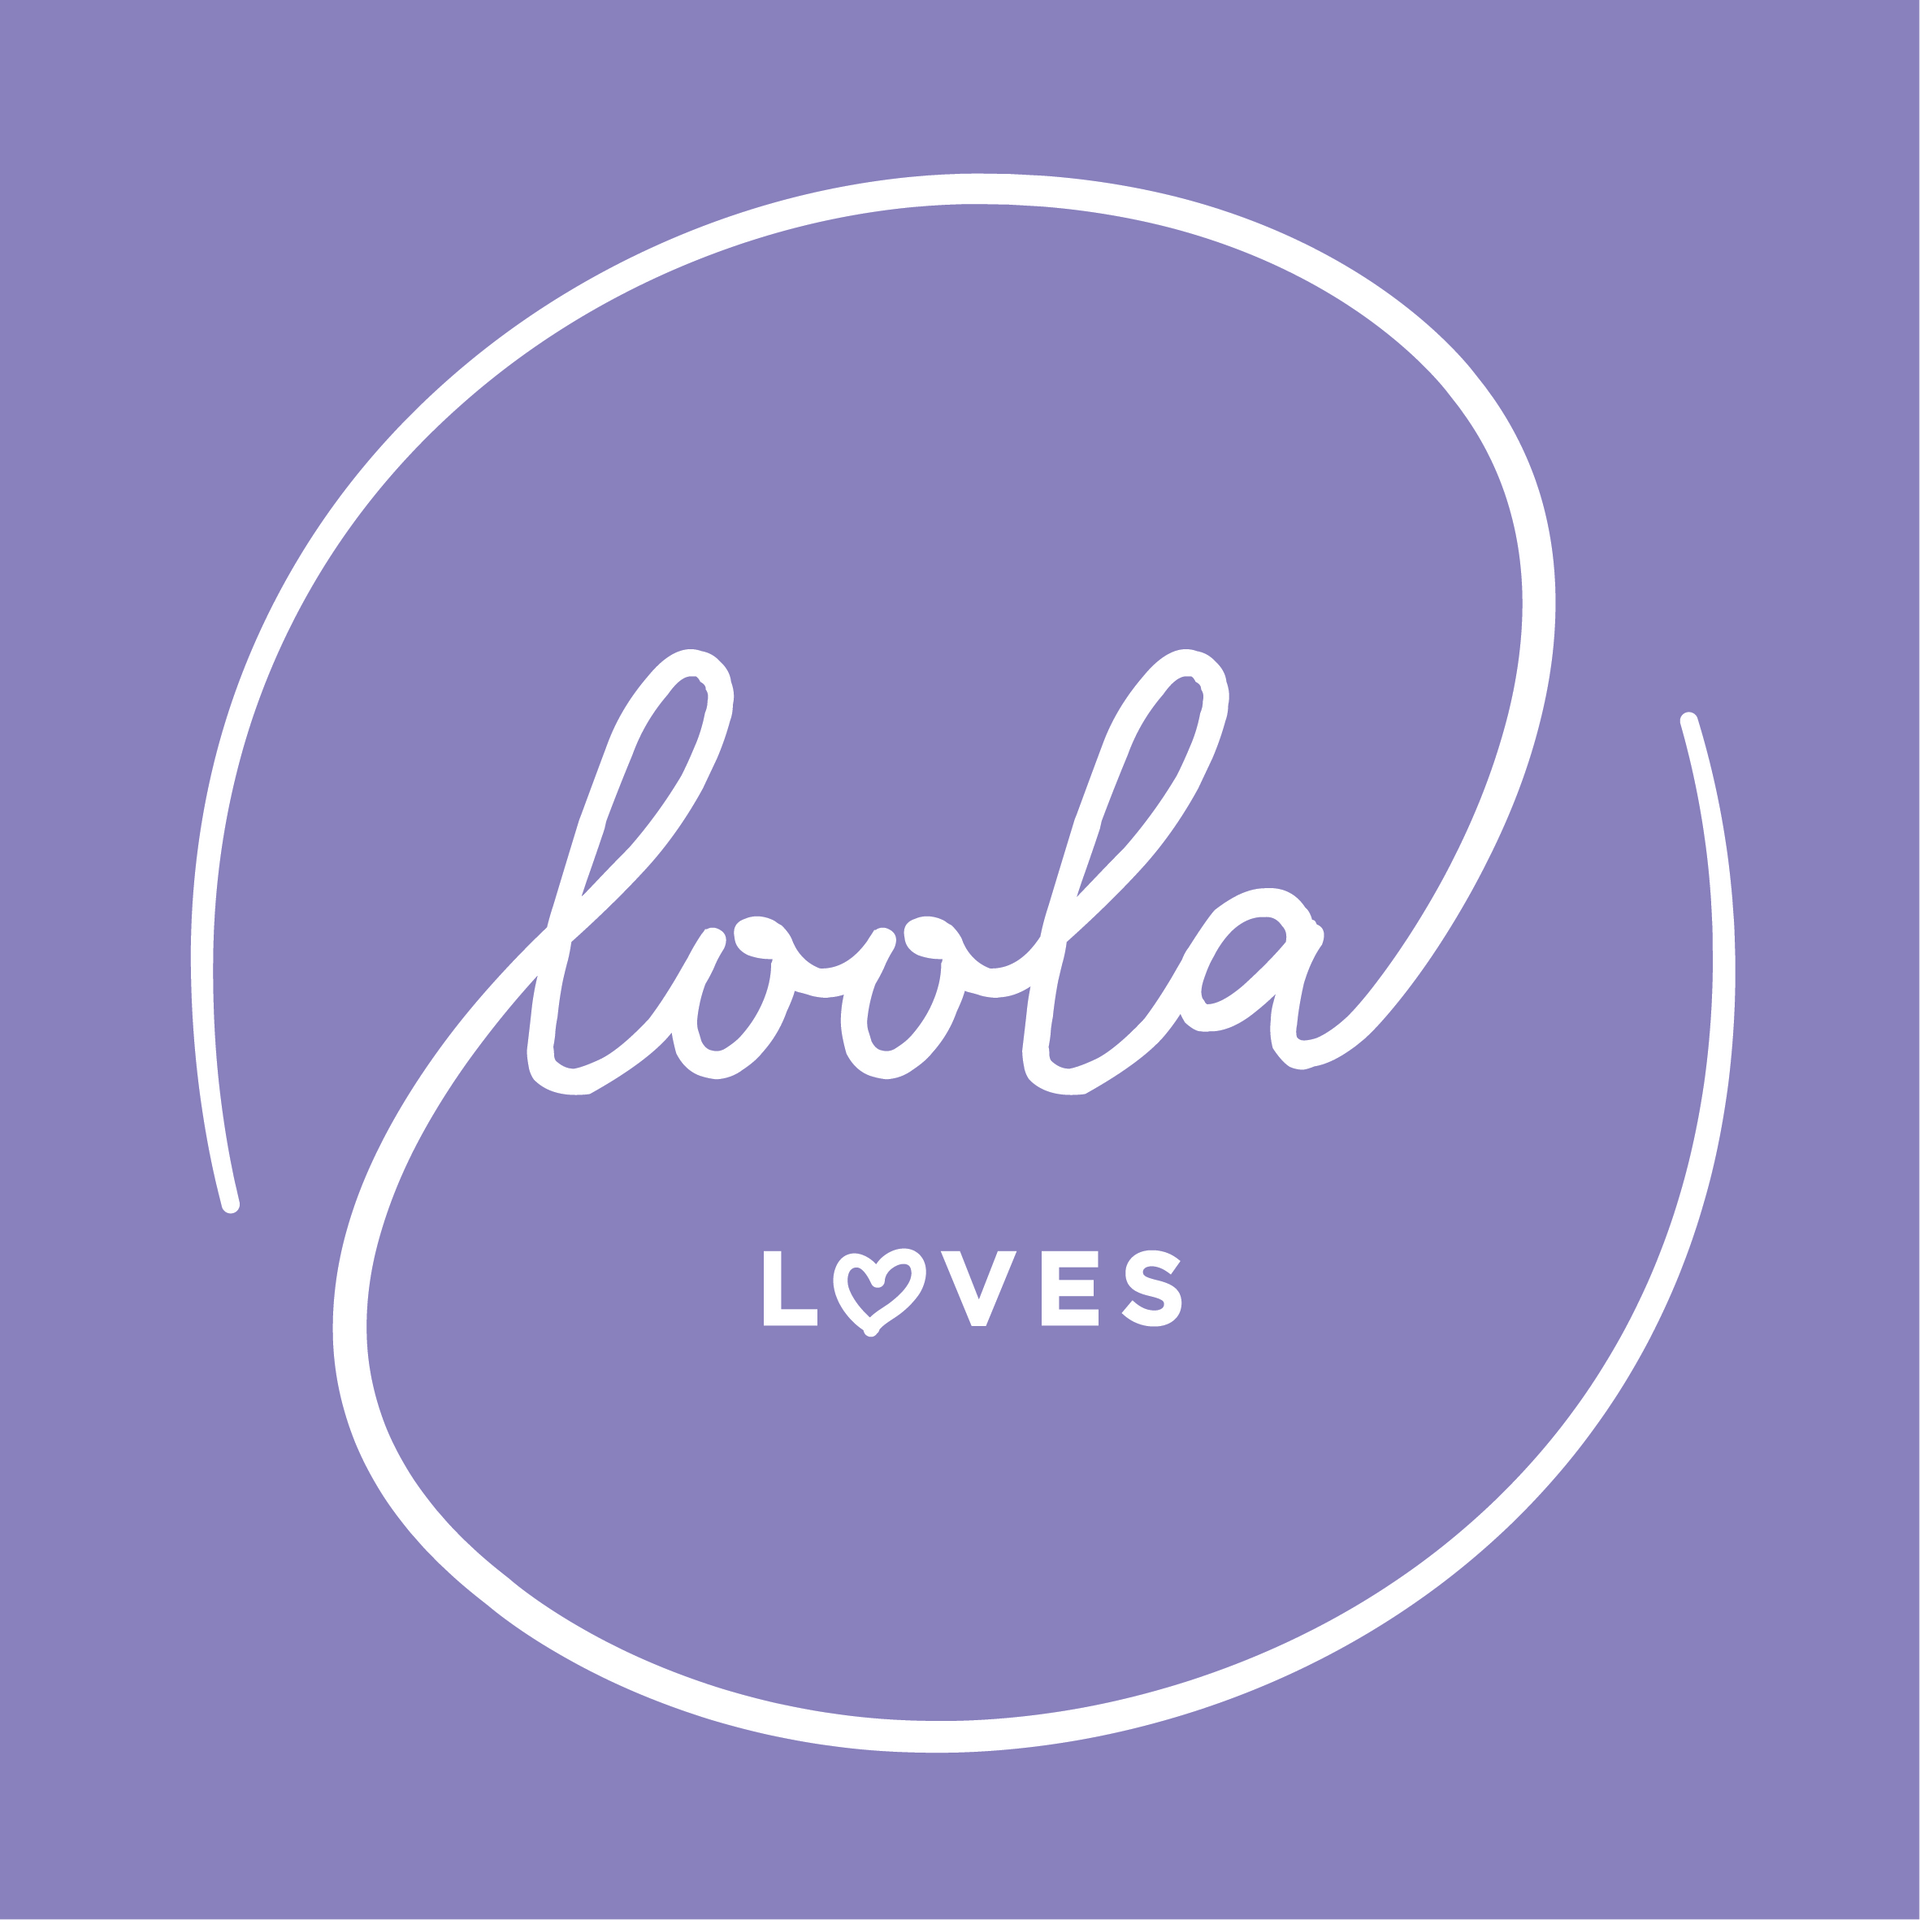 Products - LOOLA